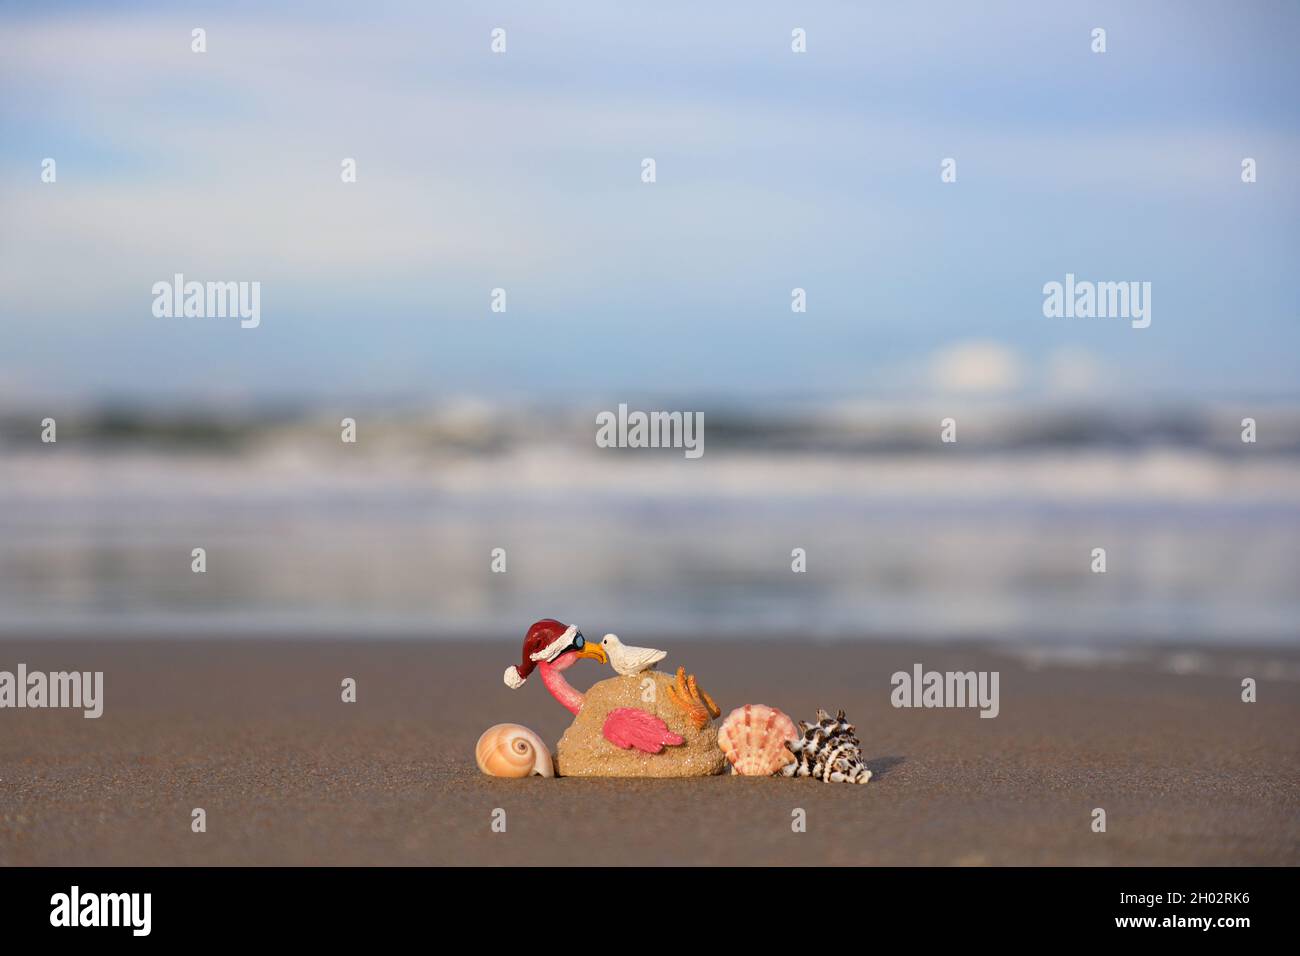 Christmas on the Beach Holiday New Year Santa Claus Sea Shell Snowman Jesus Baby Birth Stock Photo